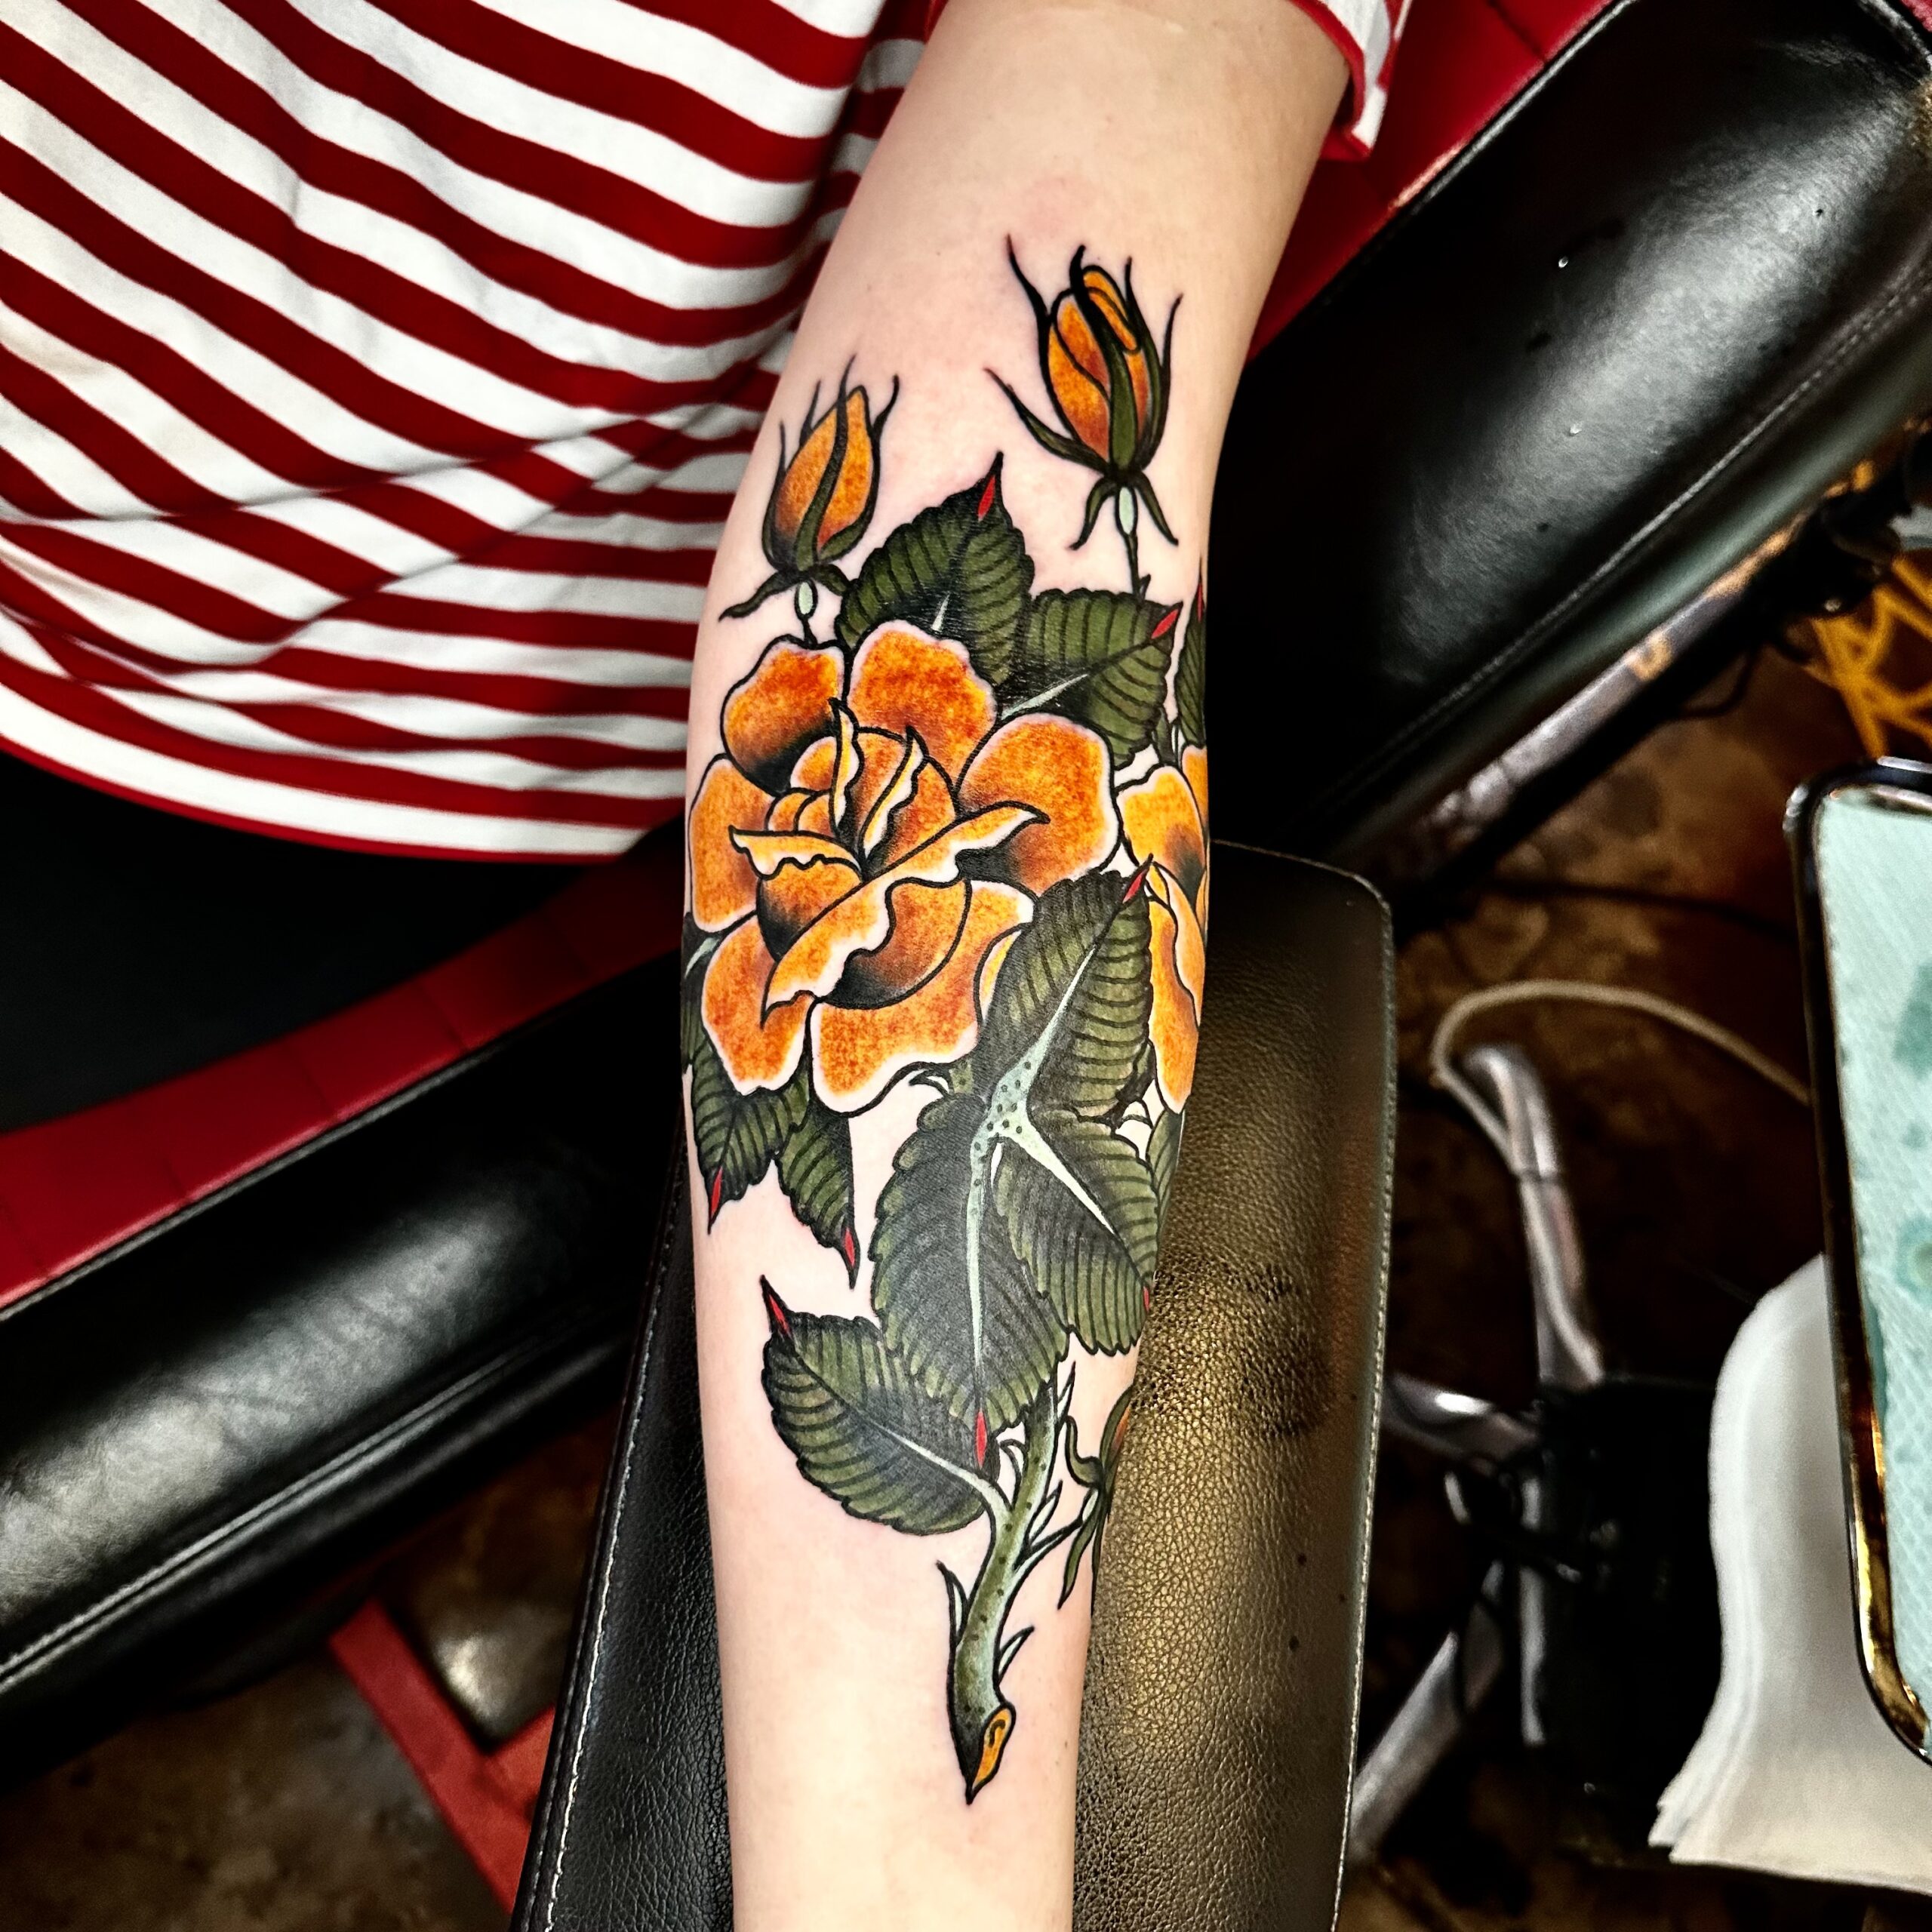 Tattoo of yellow and orange flowers